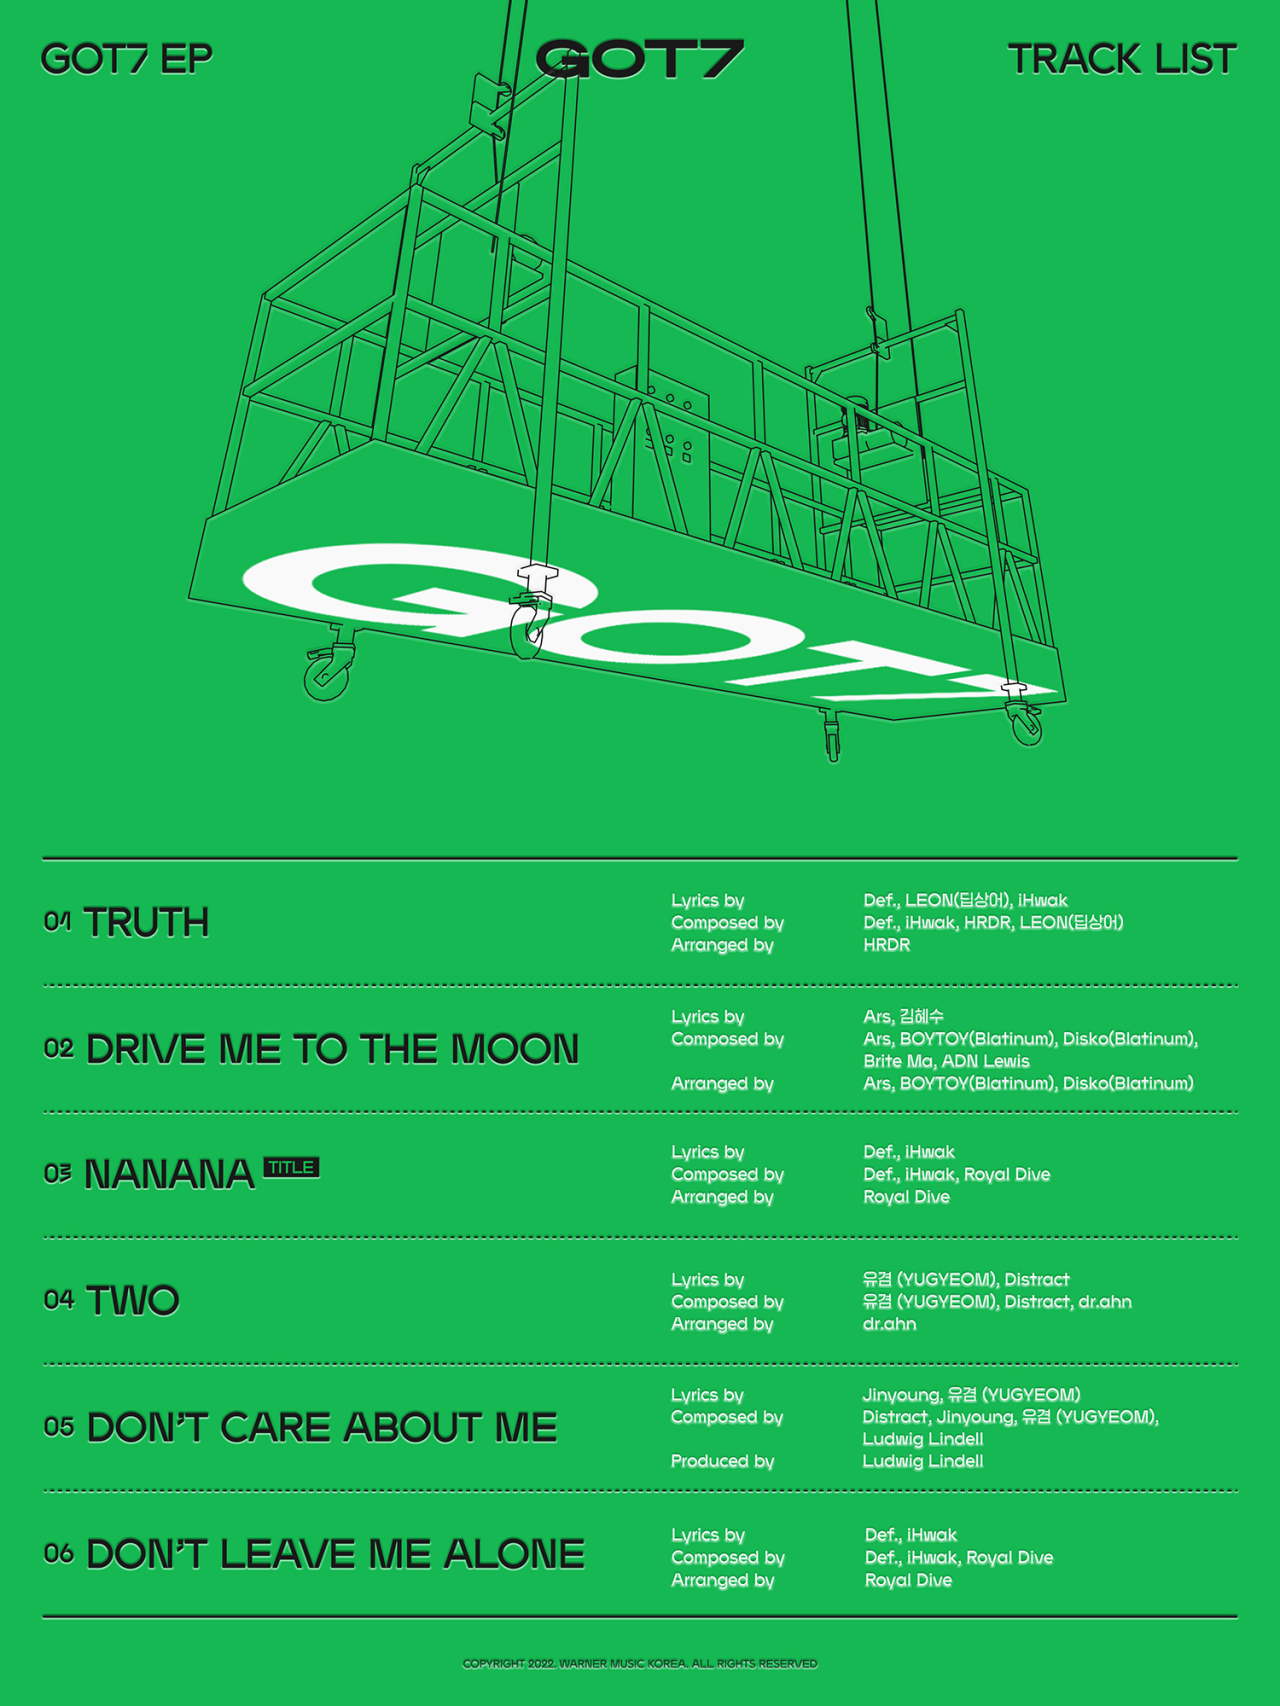 Tracklist of GOT7’s “GOT7” (Warner Music Korea)